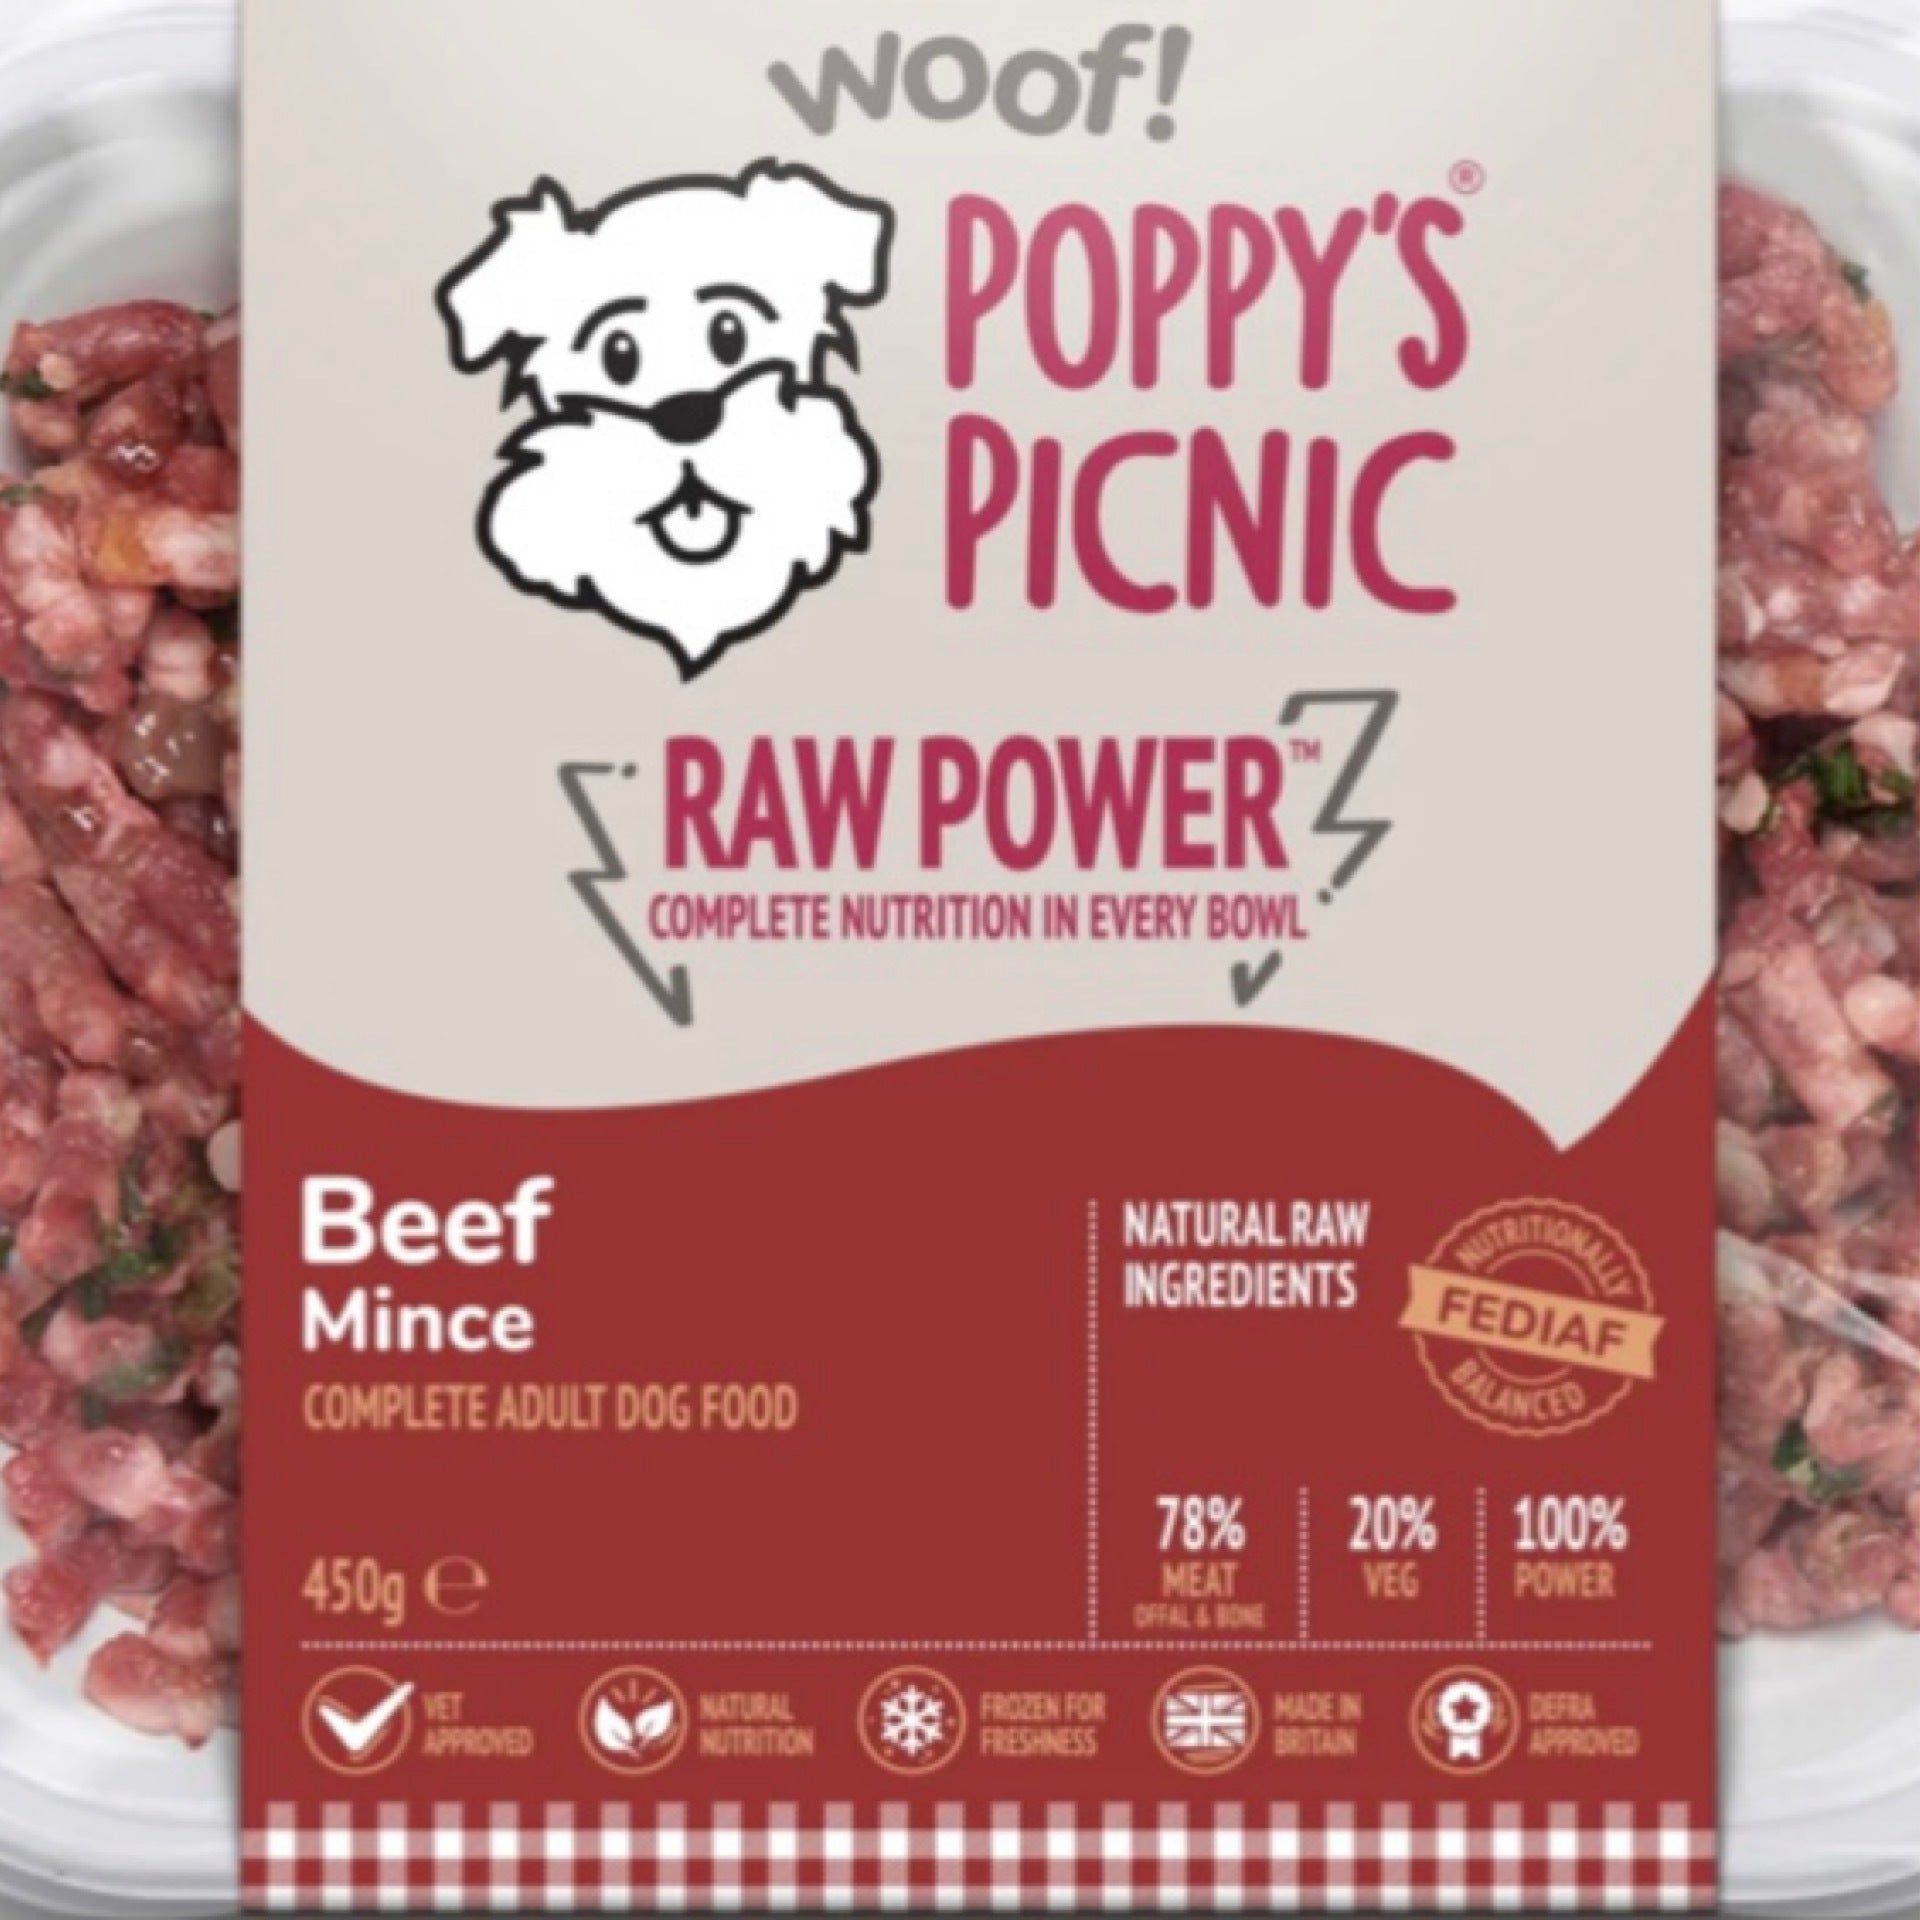 Poppy's Picnic Raw Power Beef 450g